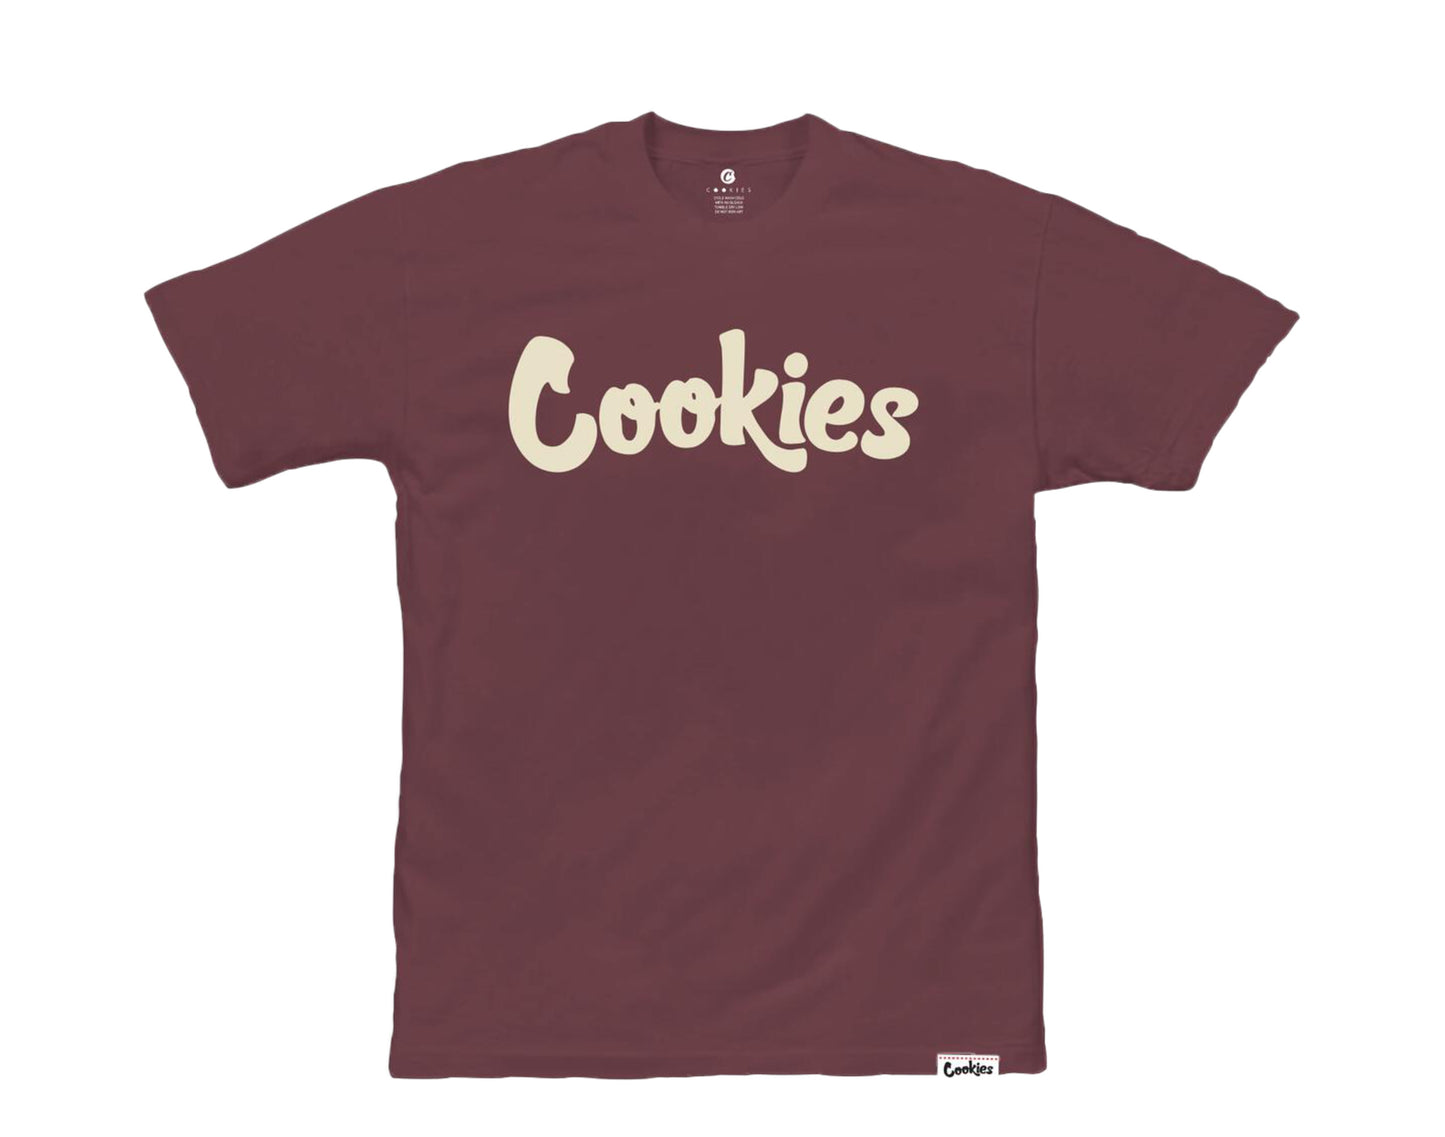 Cookies Original Mint Burgundy/Cream Men's Tee Shirt 1546T4384-BRC